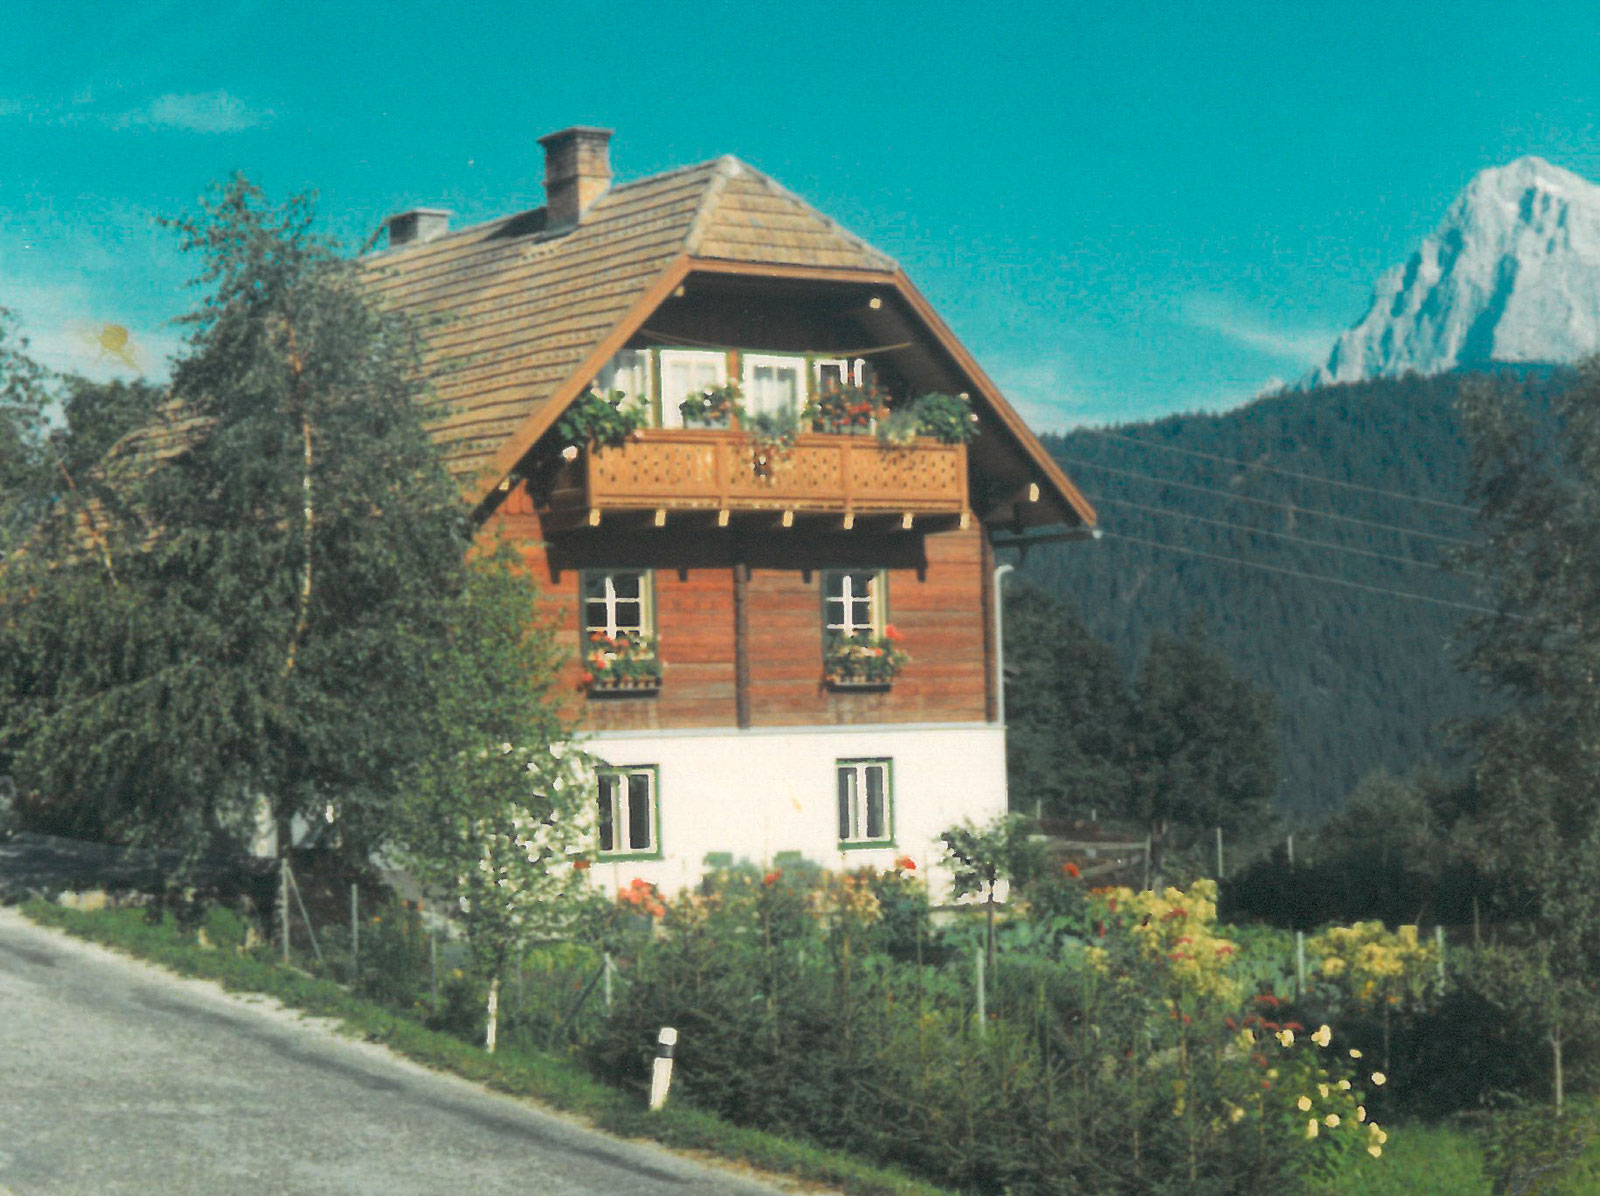 Haus Talblick in the year 1970